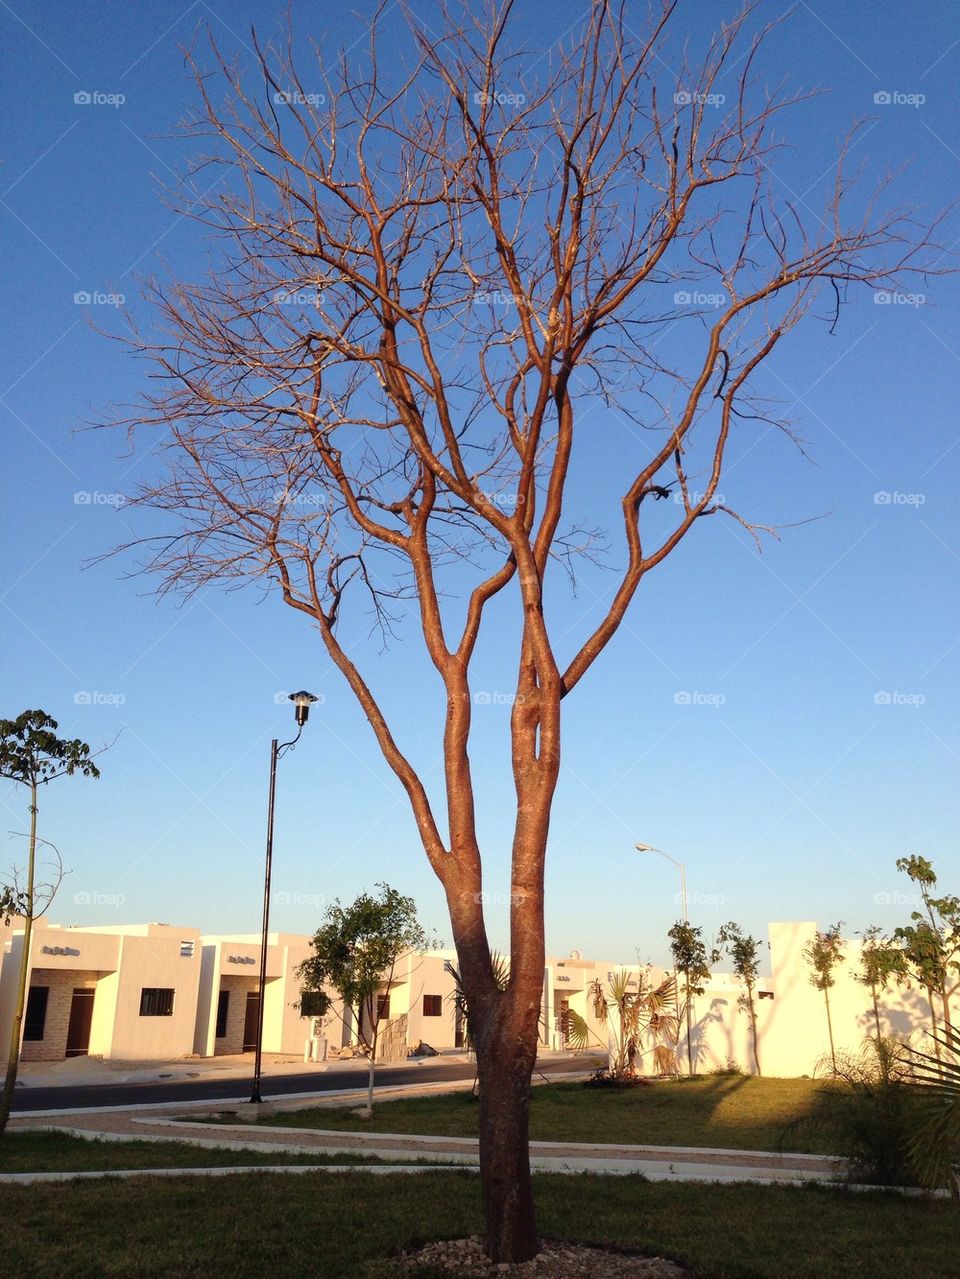 Sad tree